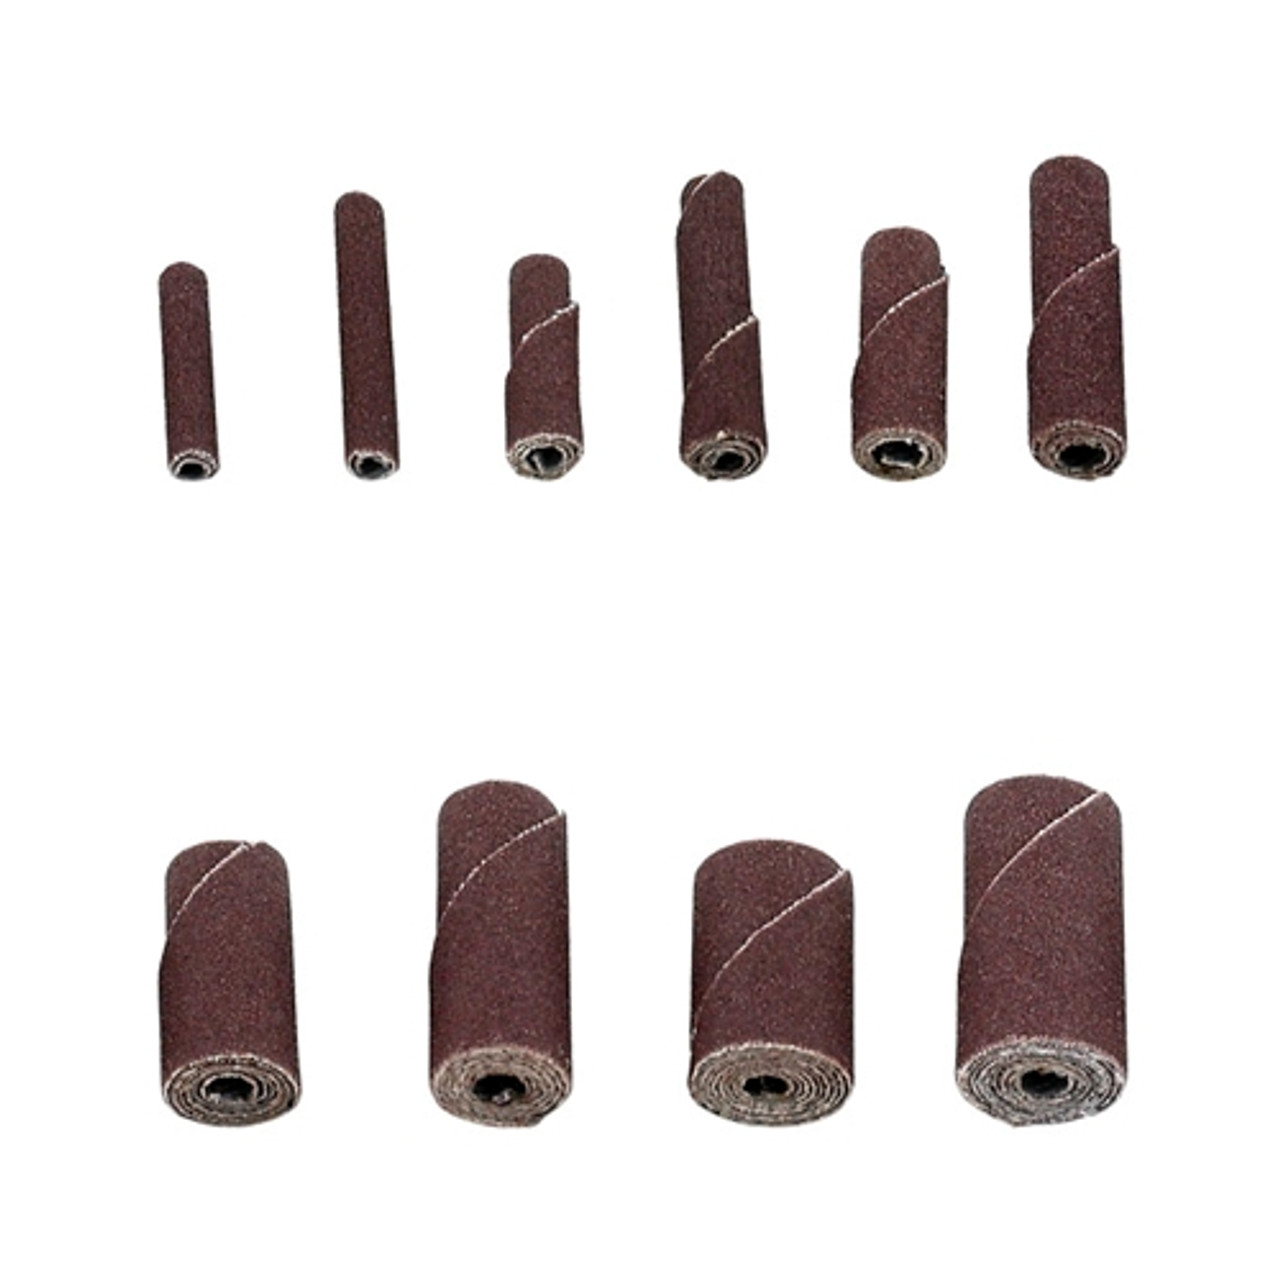 Abrasive Cartridge Rolls - 3/8" x 3/4" x 1/8", 180 Grit